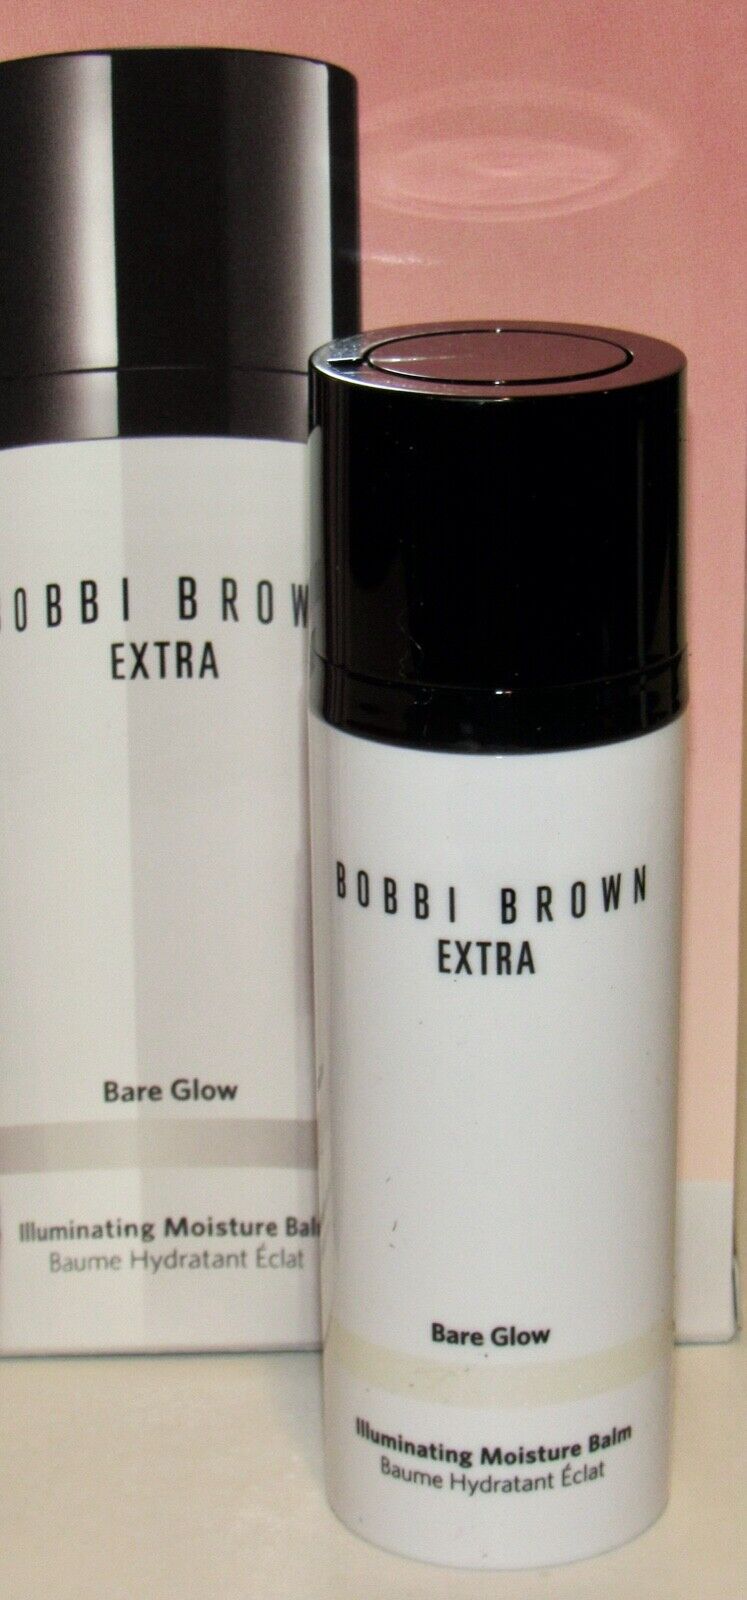 Bobbi Brown Extra Illuminating Moisture Balm BARE GLOW 1 Oz 30 mL Full Size NWOB